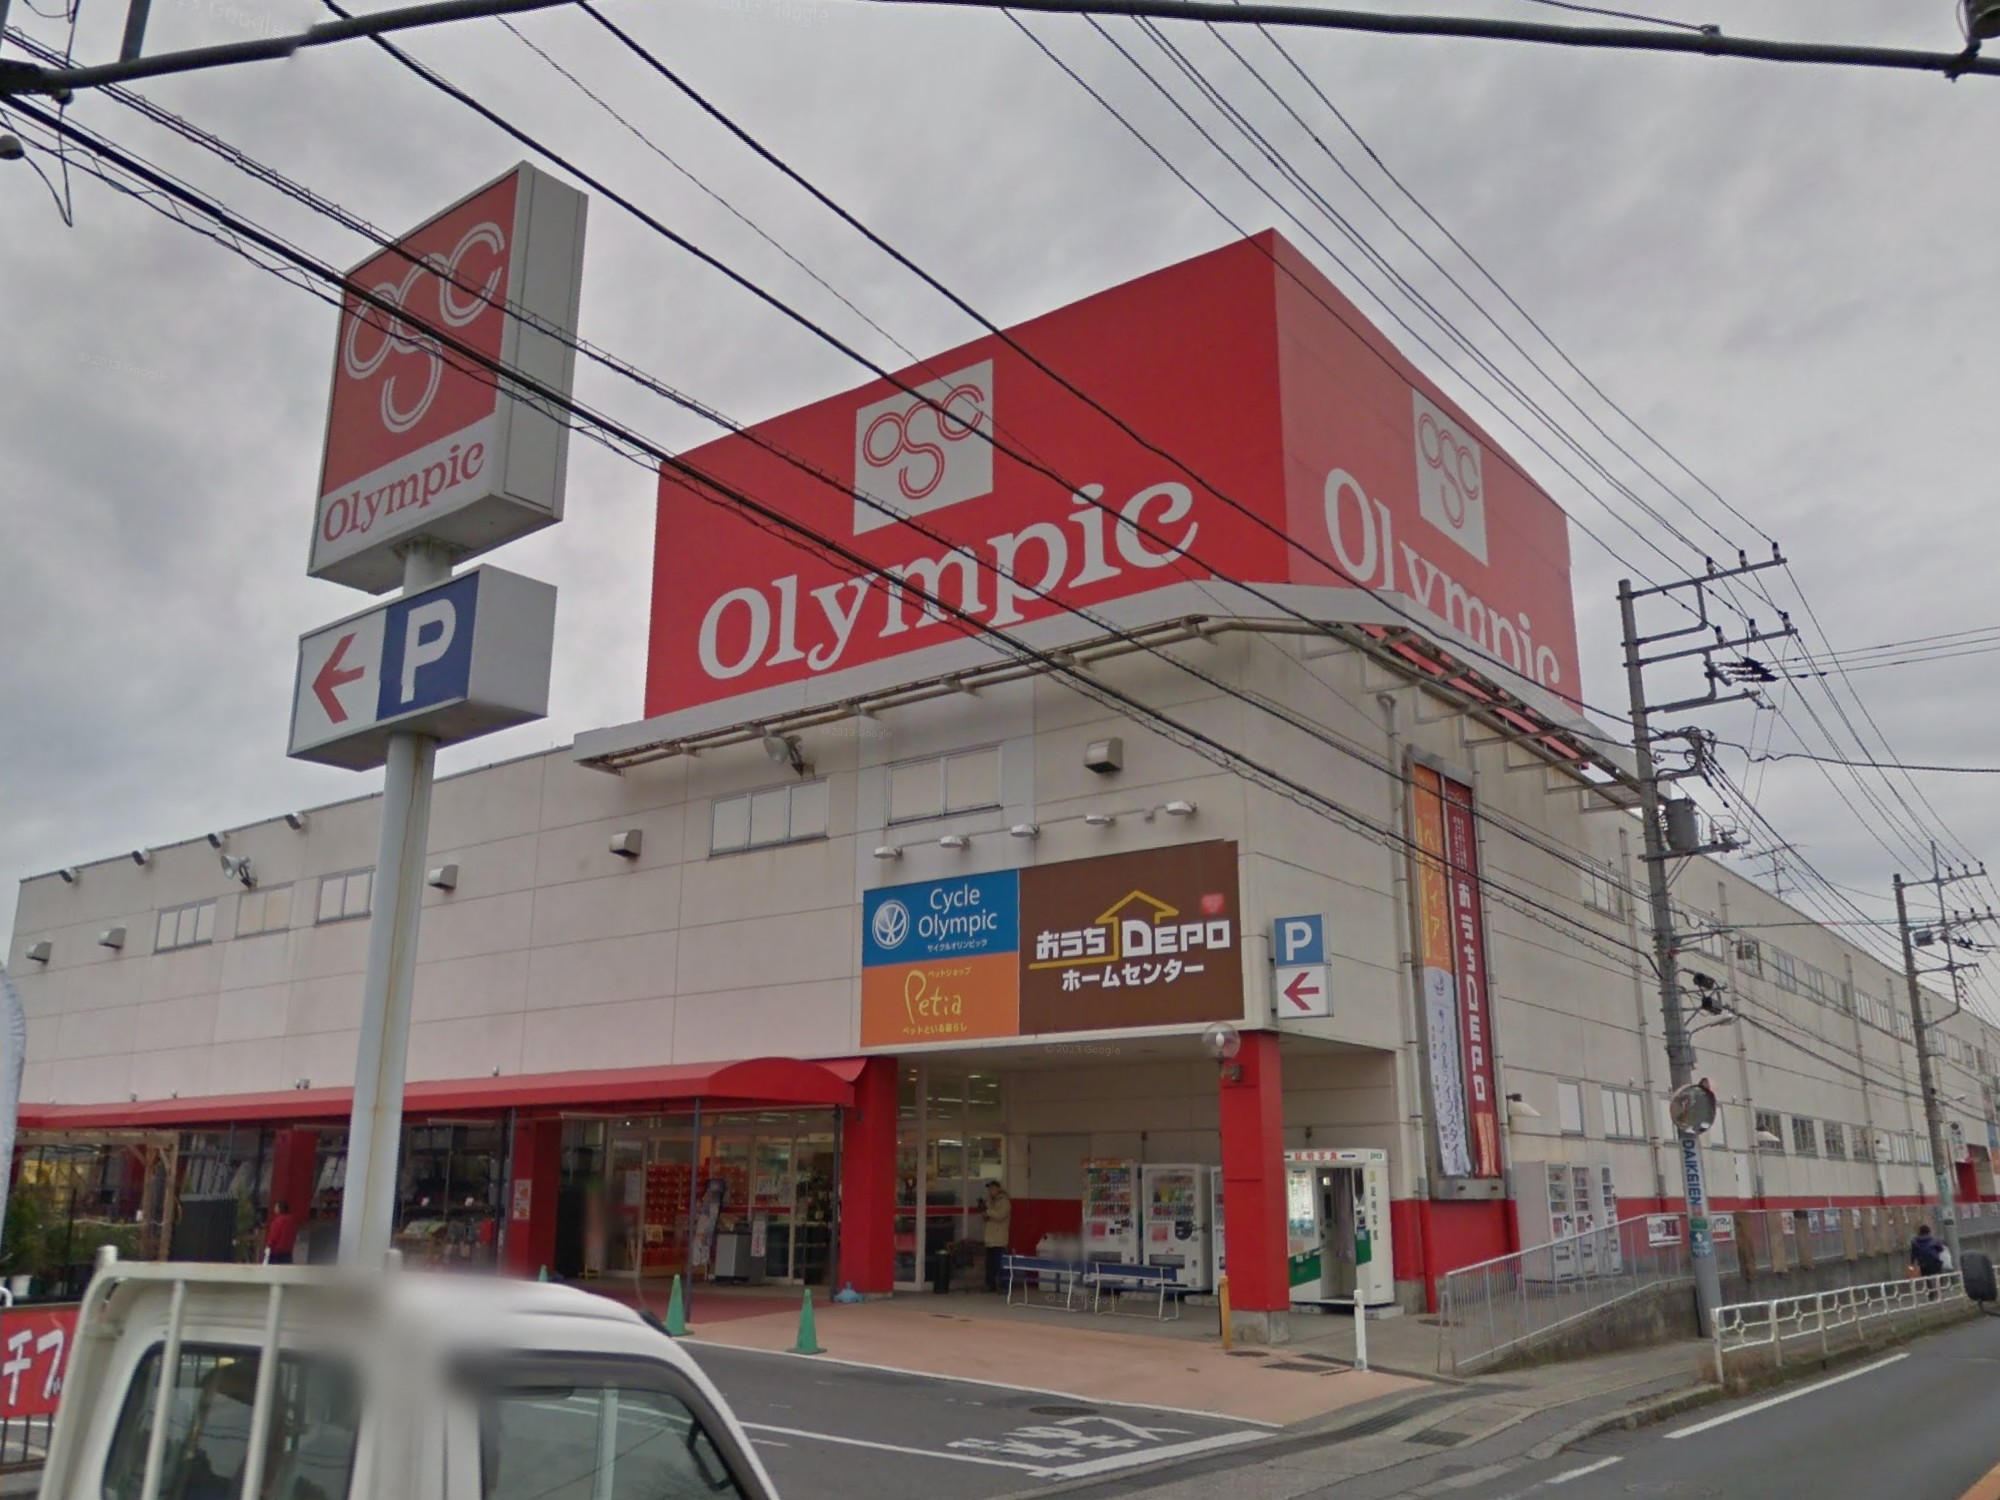 Supermarket. 286m to Olympic hypermarket Kamagaya store (Super)